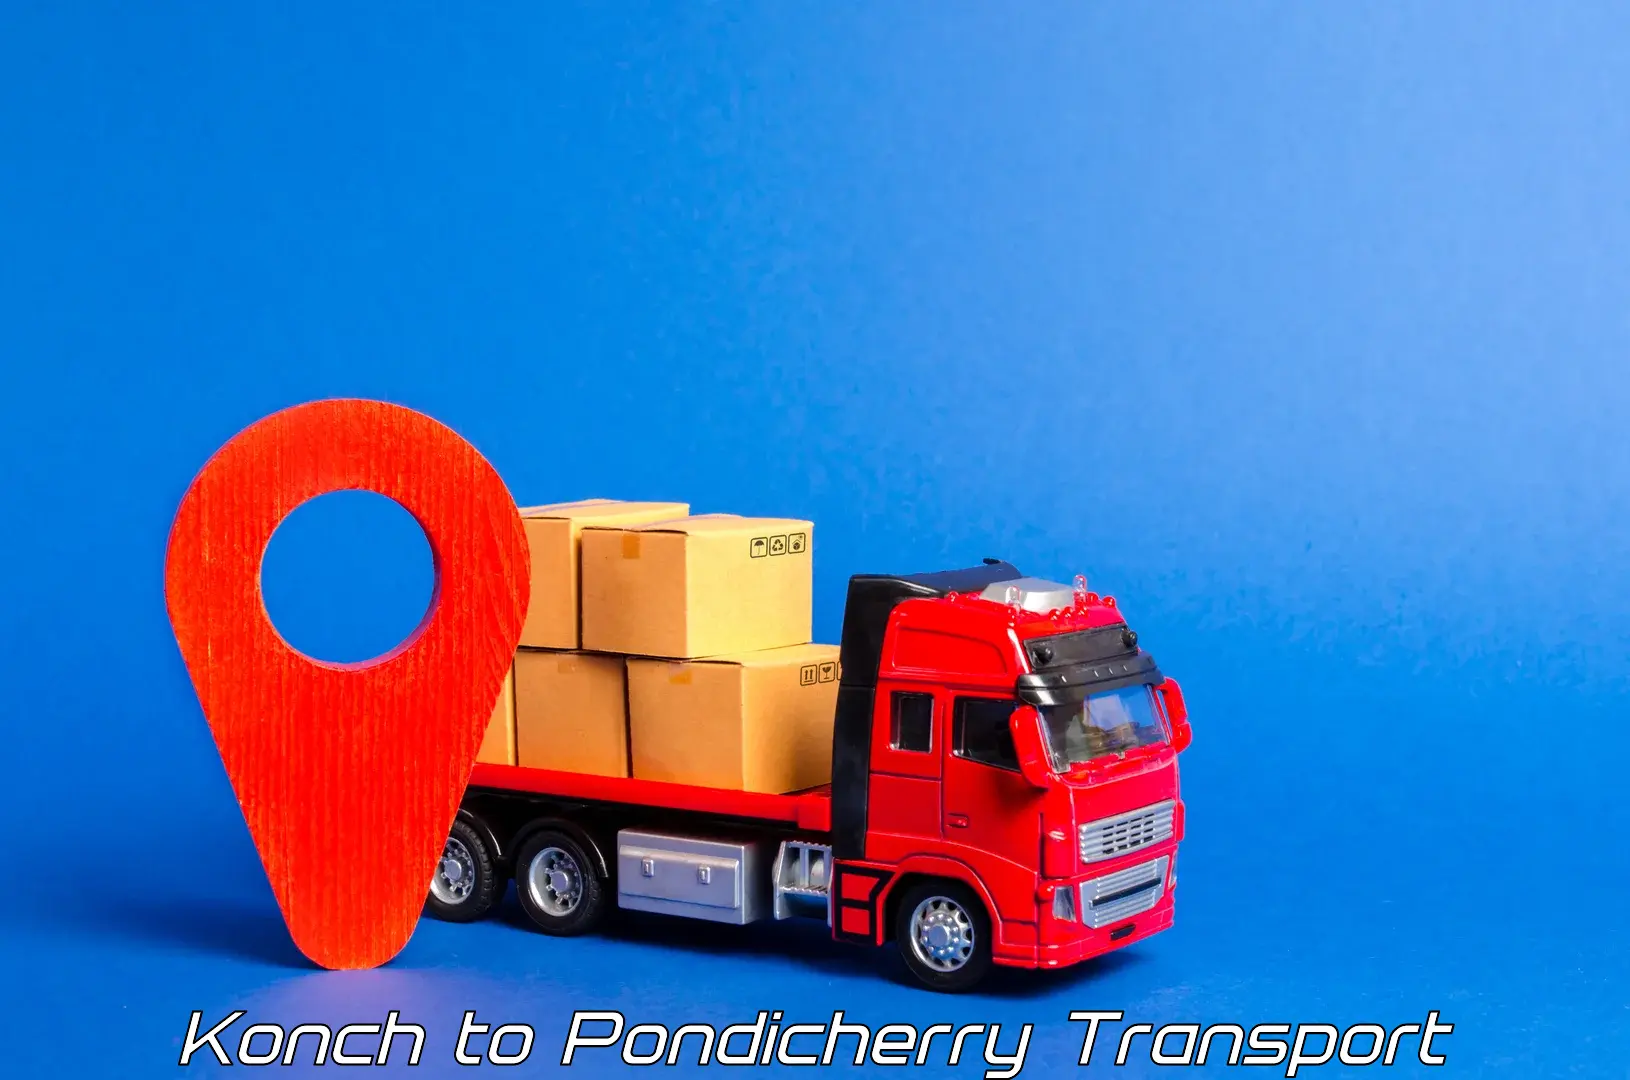 Transport in sharing Konch to Pondicherry